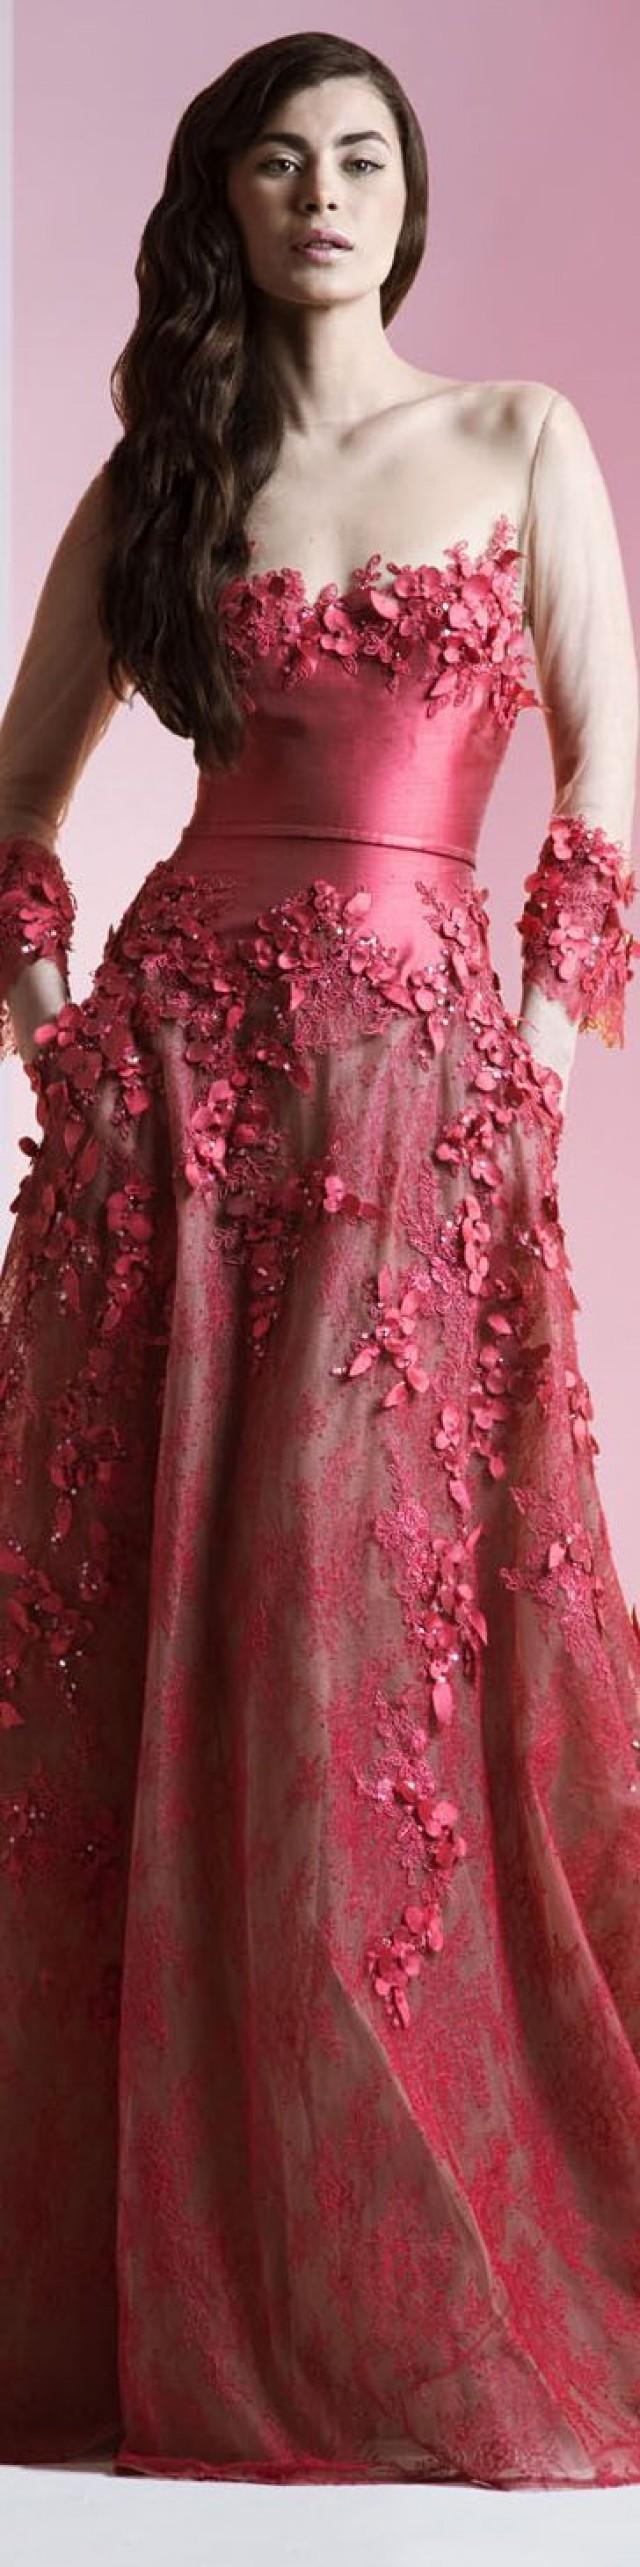 Pink Wedding - Gowns....Passion Pinks #2120934 - Weddbook